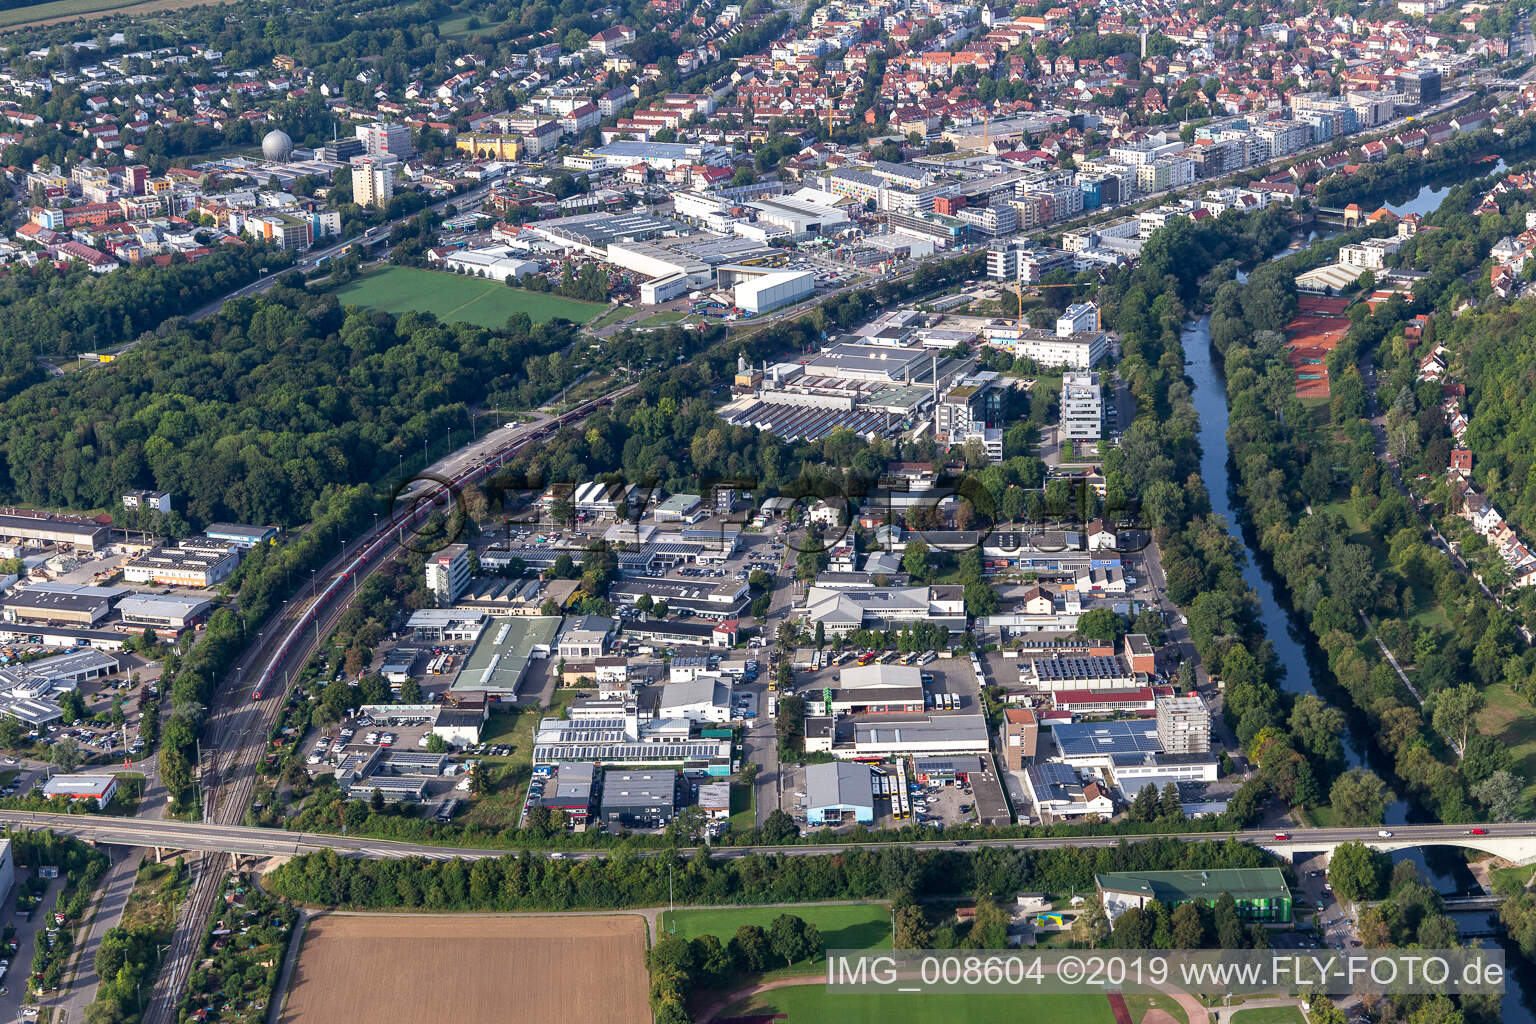 Industrial area August Bebel Straße in Tübingen in the state Baden-Wuerttemberg, Germany